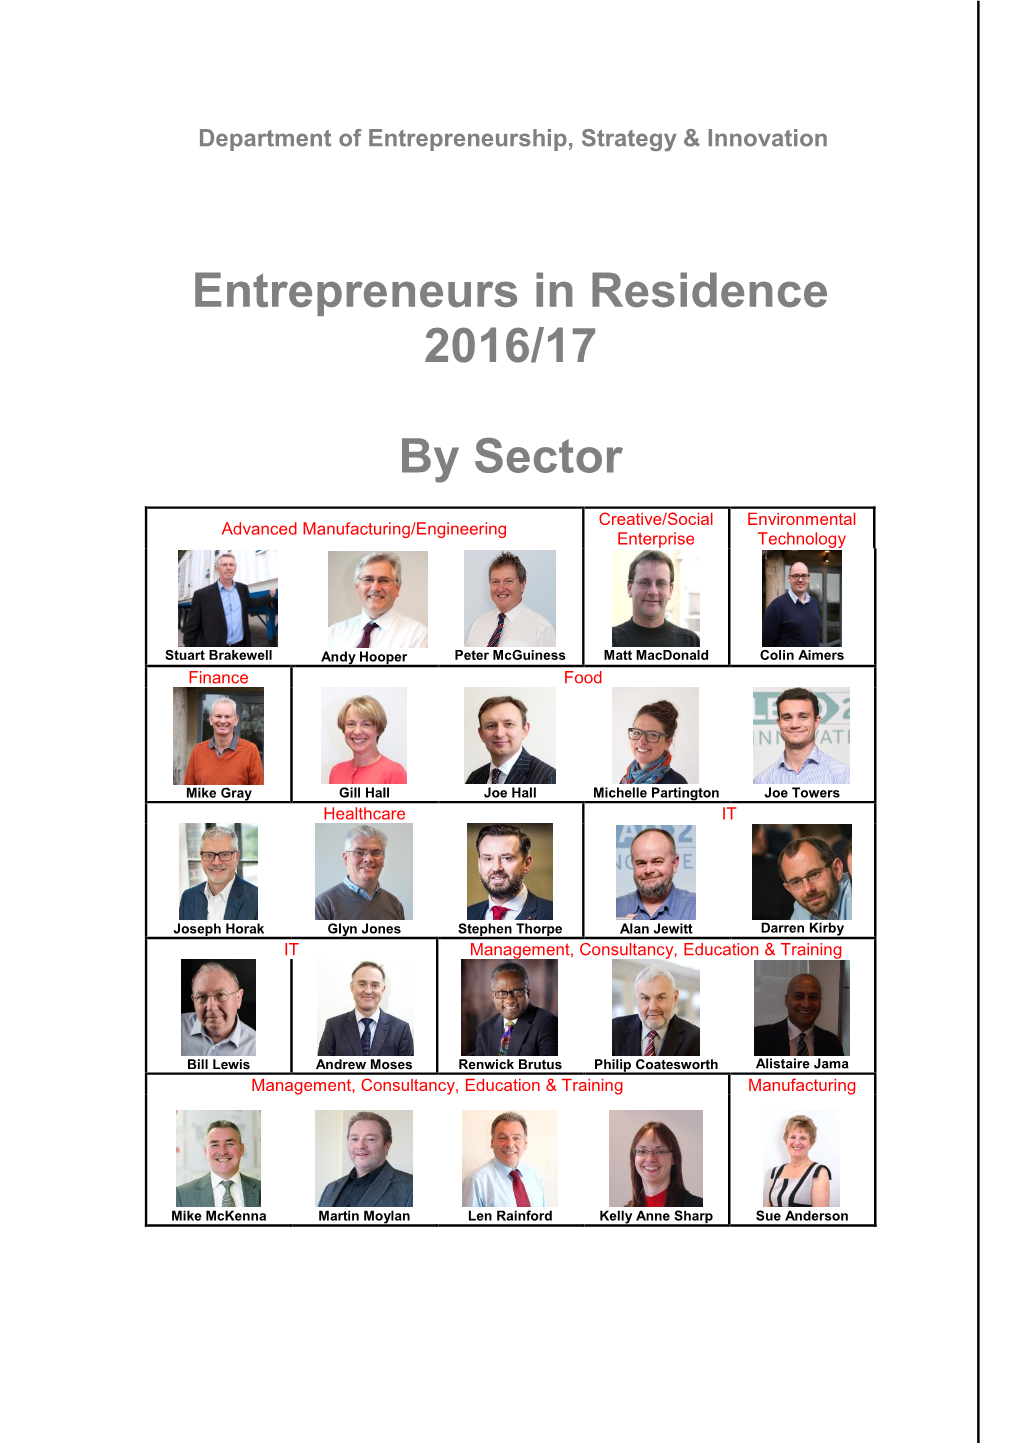 Entrepreneurs in Residence 2016/17 by Sector